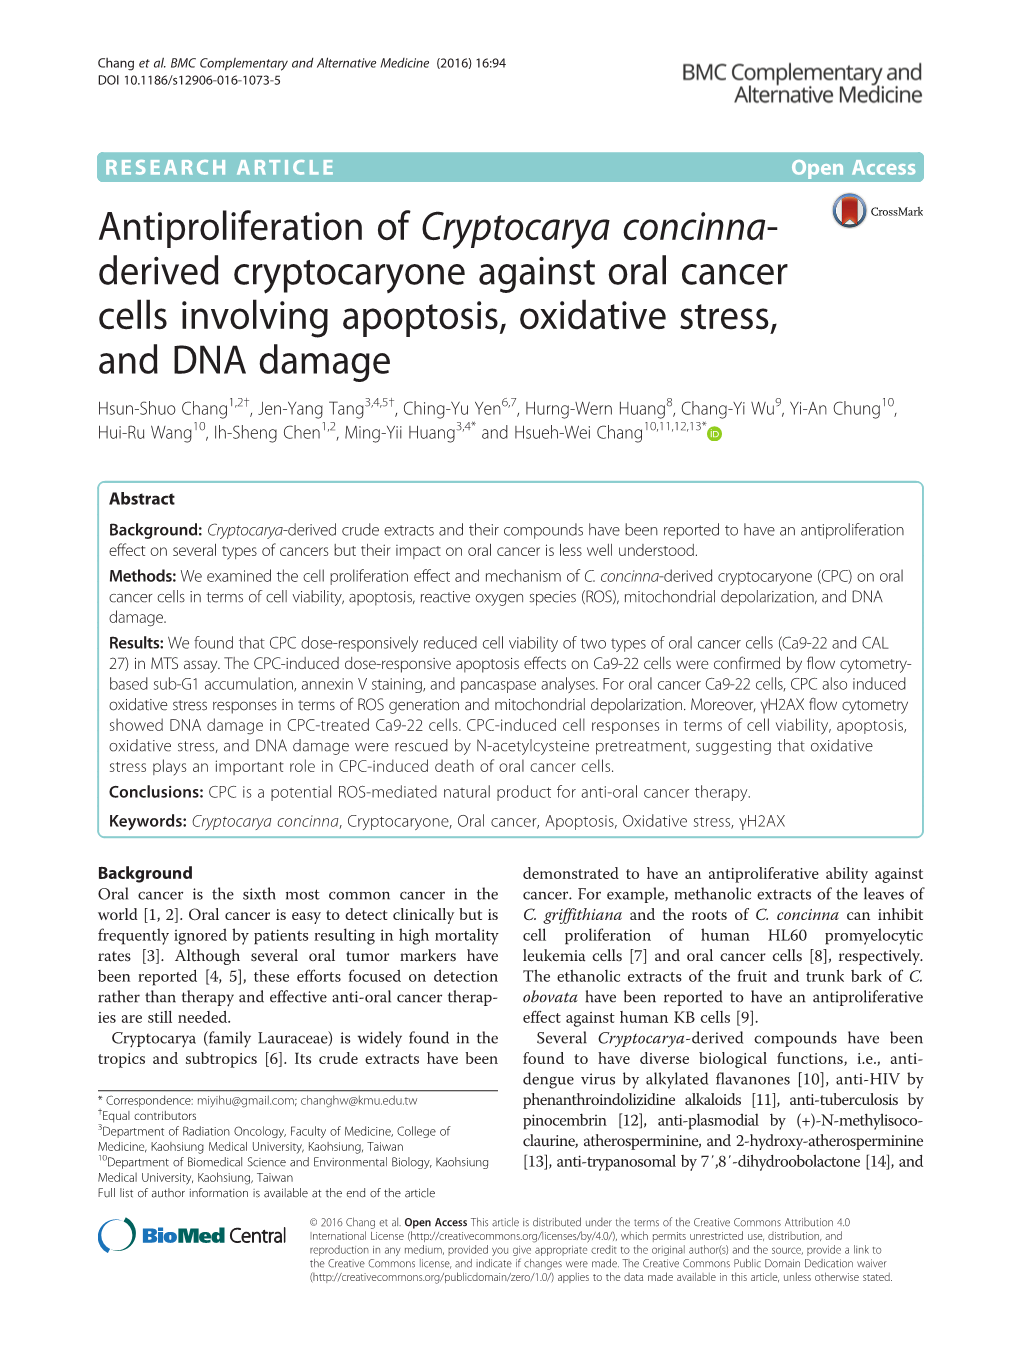 Antiproliferation of Cryptocarya Concinna-Derived Cryptocaryone Against Oral Cancer Cells Involving Apoptosis, Oxidative Stress